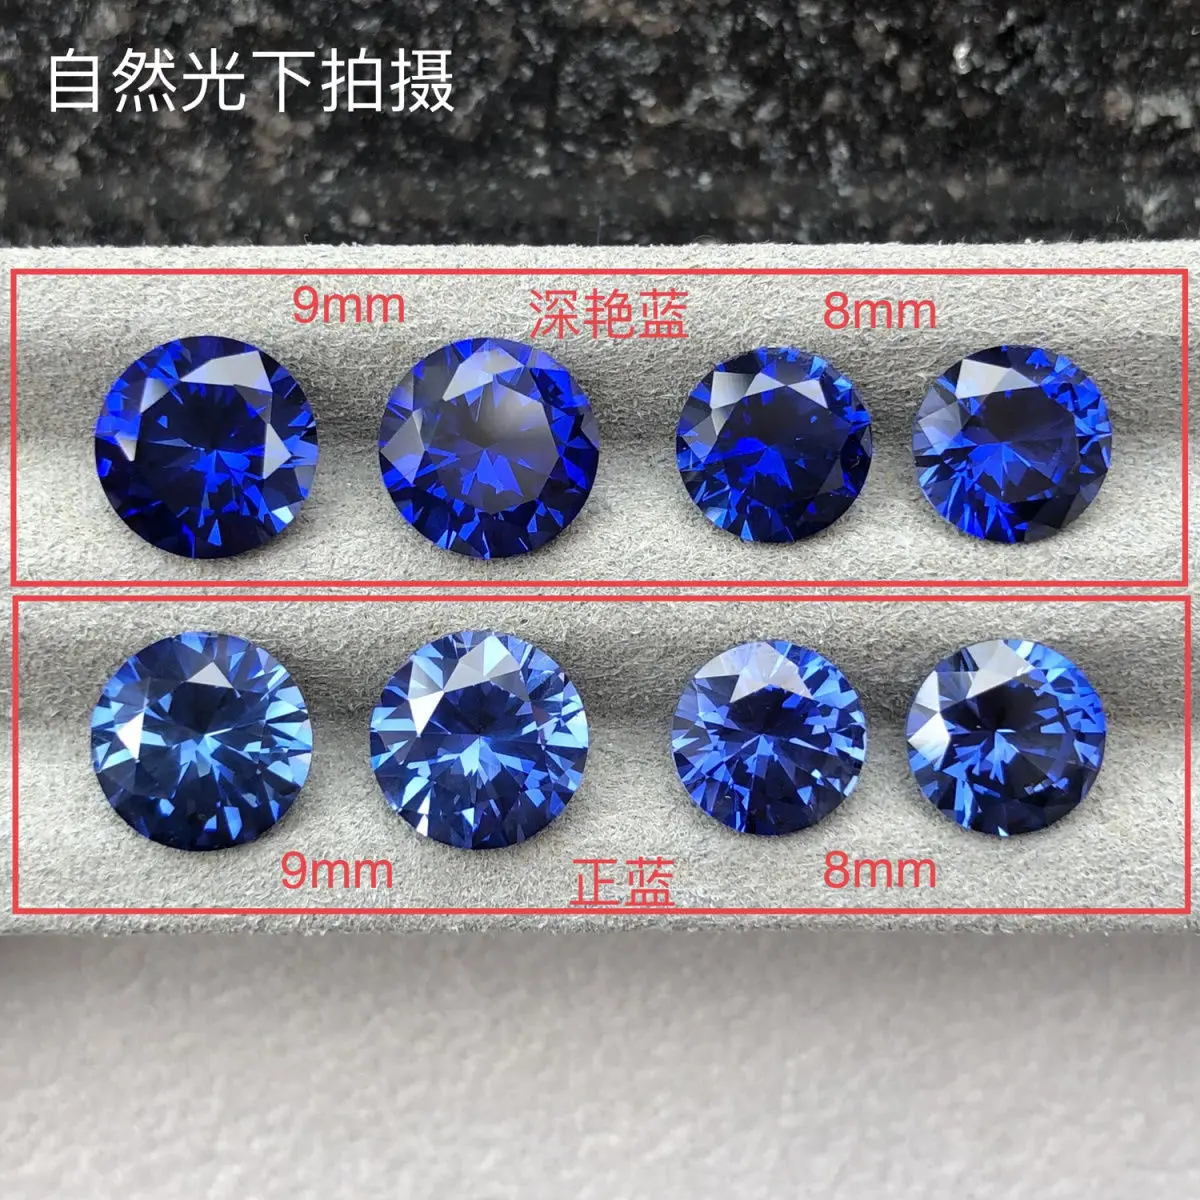 

lab sapphire blue corundum laboratory growth round fine cut stone inlay resistant to high temperature wax inlay hardness 9 mohs